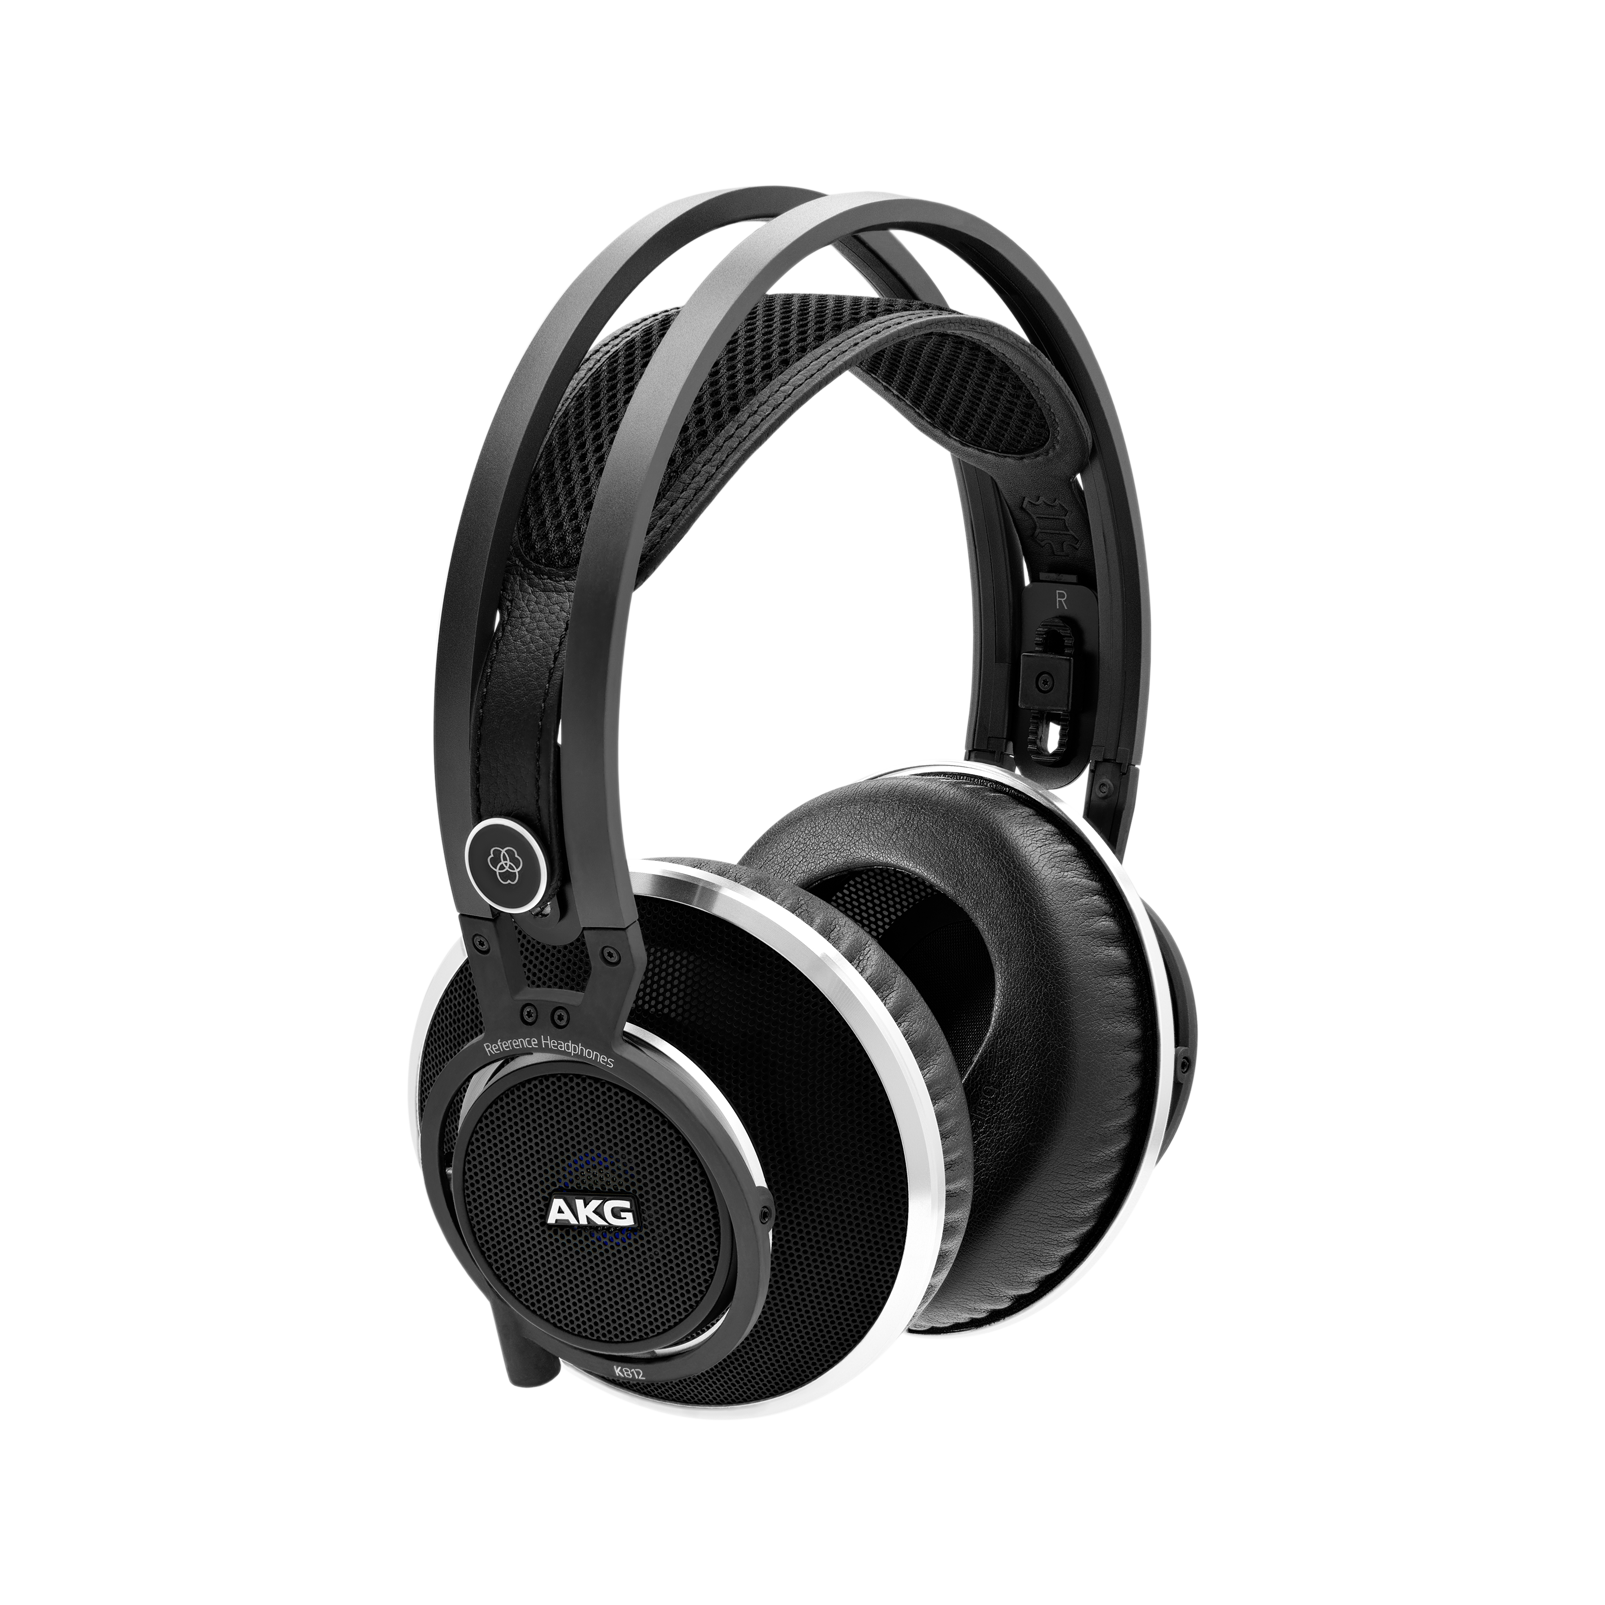 K812 - Black - Superior reference headphones - Hero